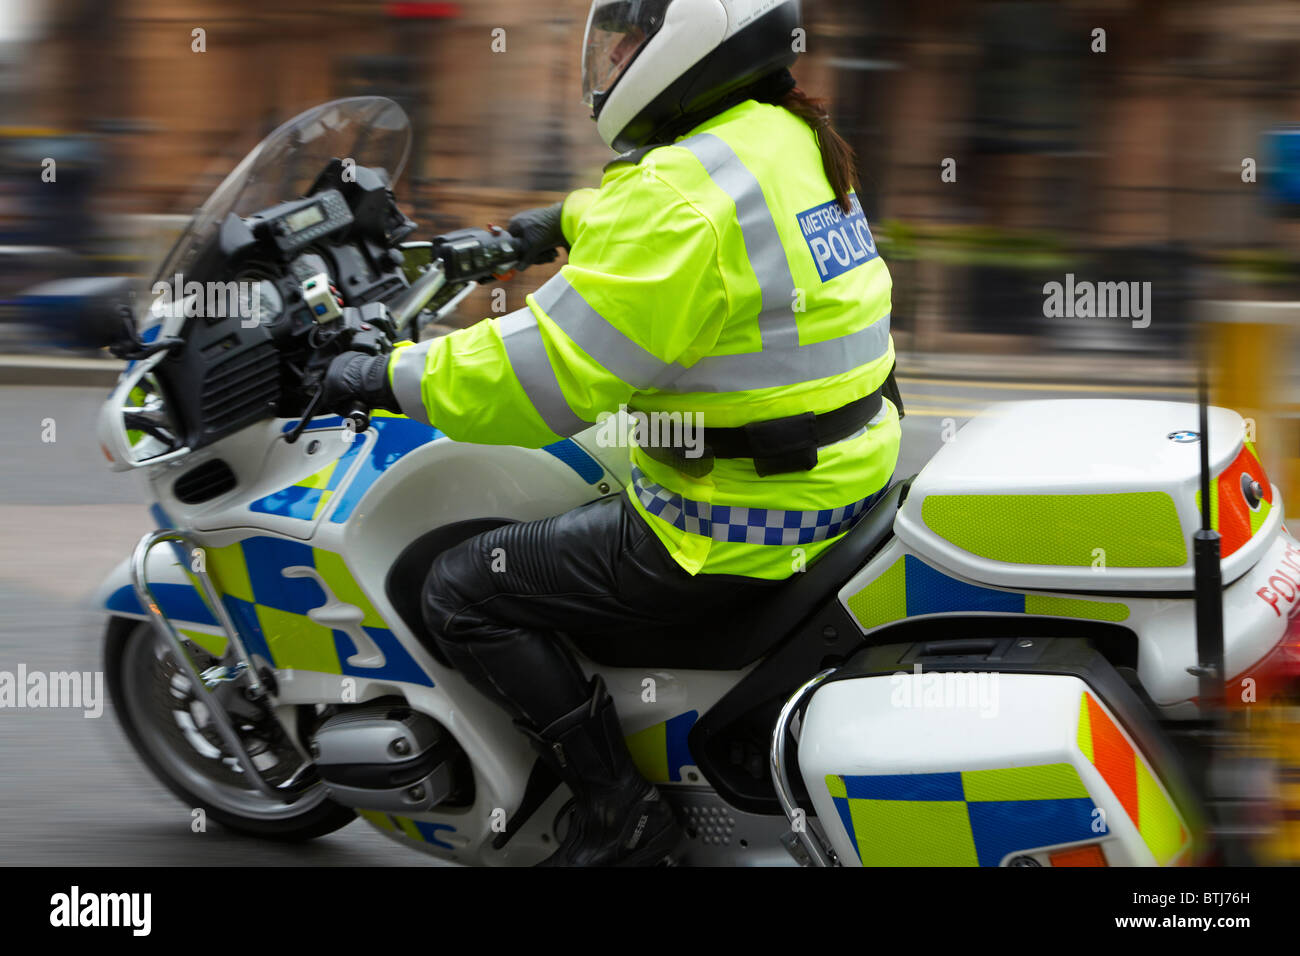 Motos policiales, London, England, Reino Unido Foto de stock